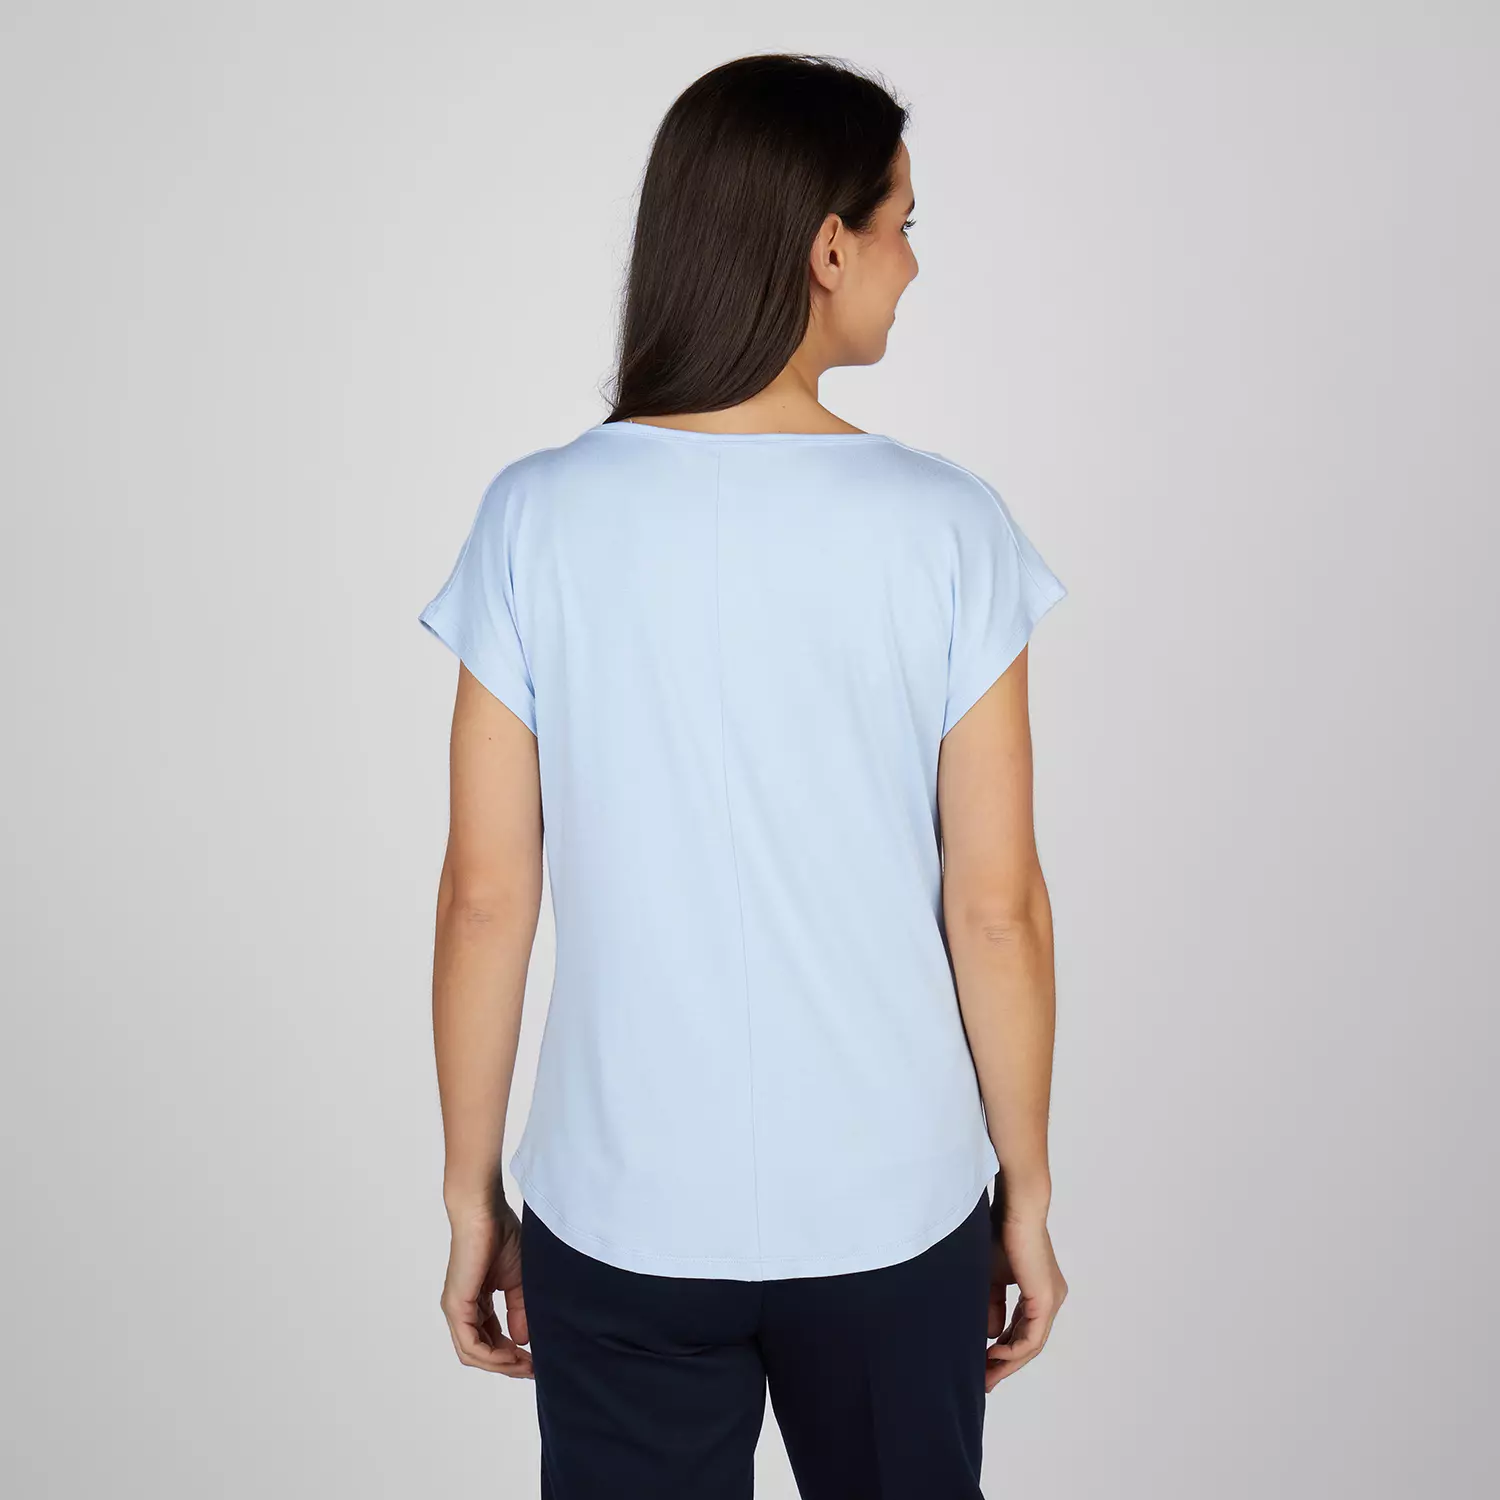 Feminines Shirt Tola mit Wasserfallausschnitt